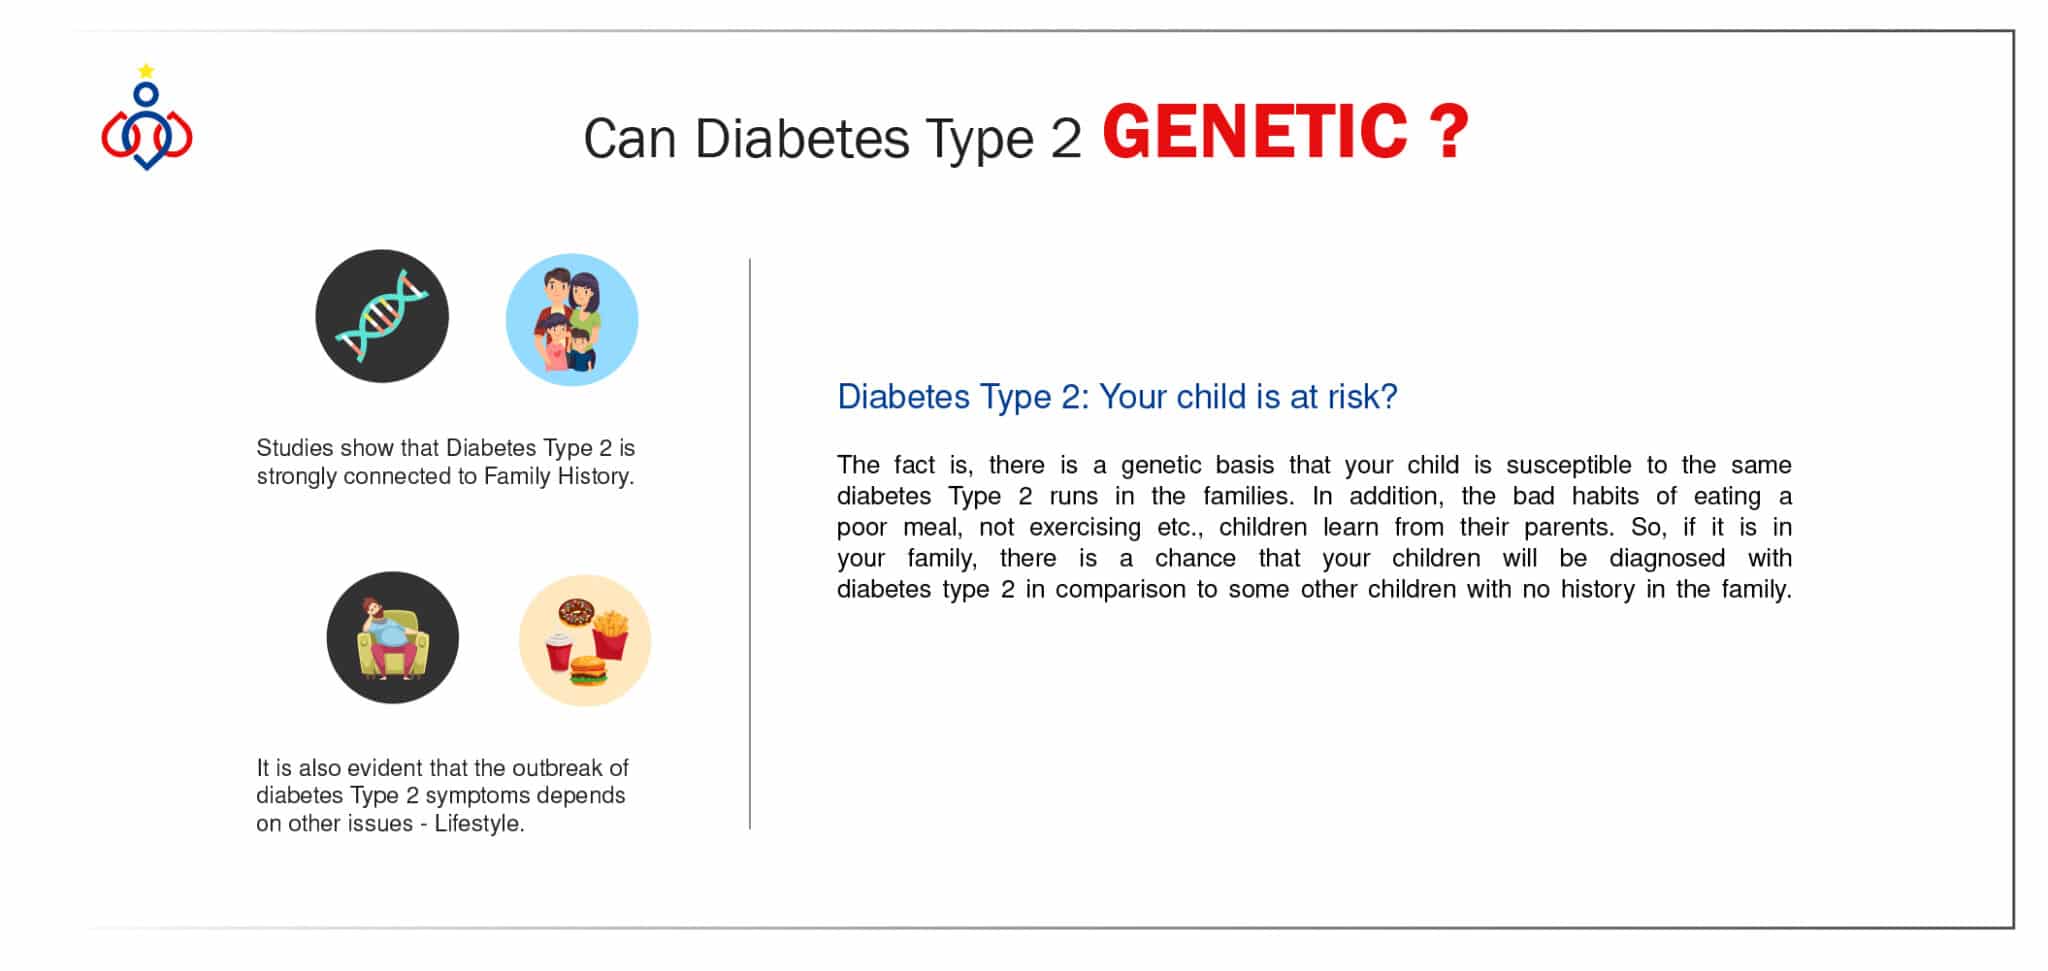 Can Diabetes Type 2 be Genetic?